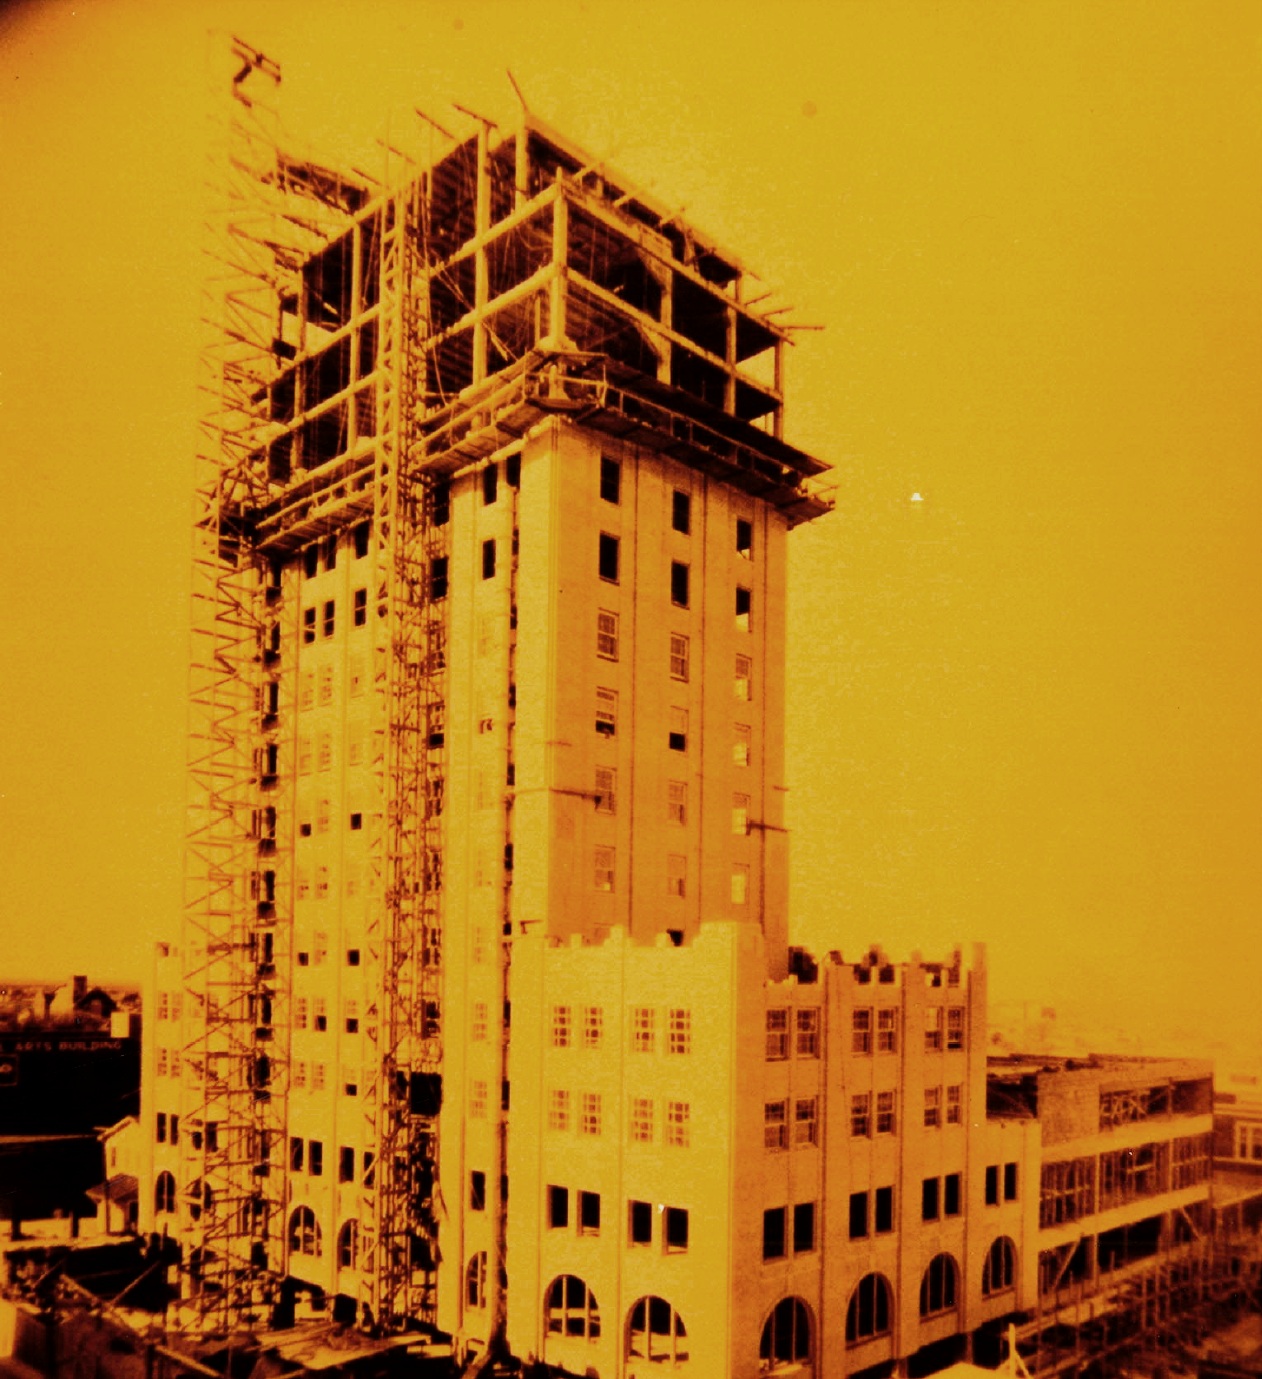 WOOTEN HOTEL CONSTRUCTION (1929)